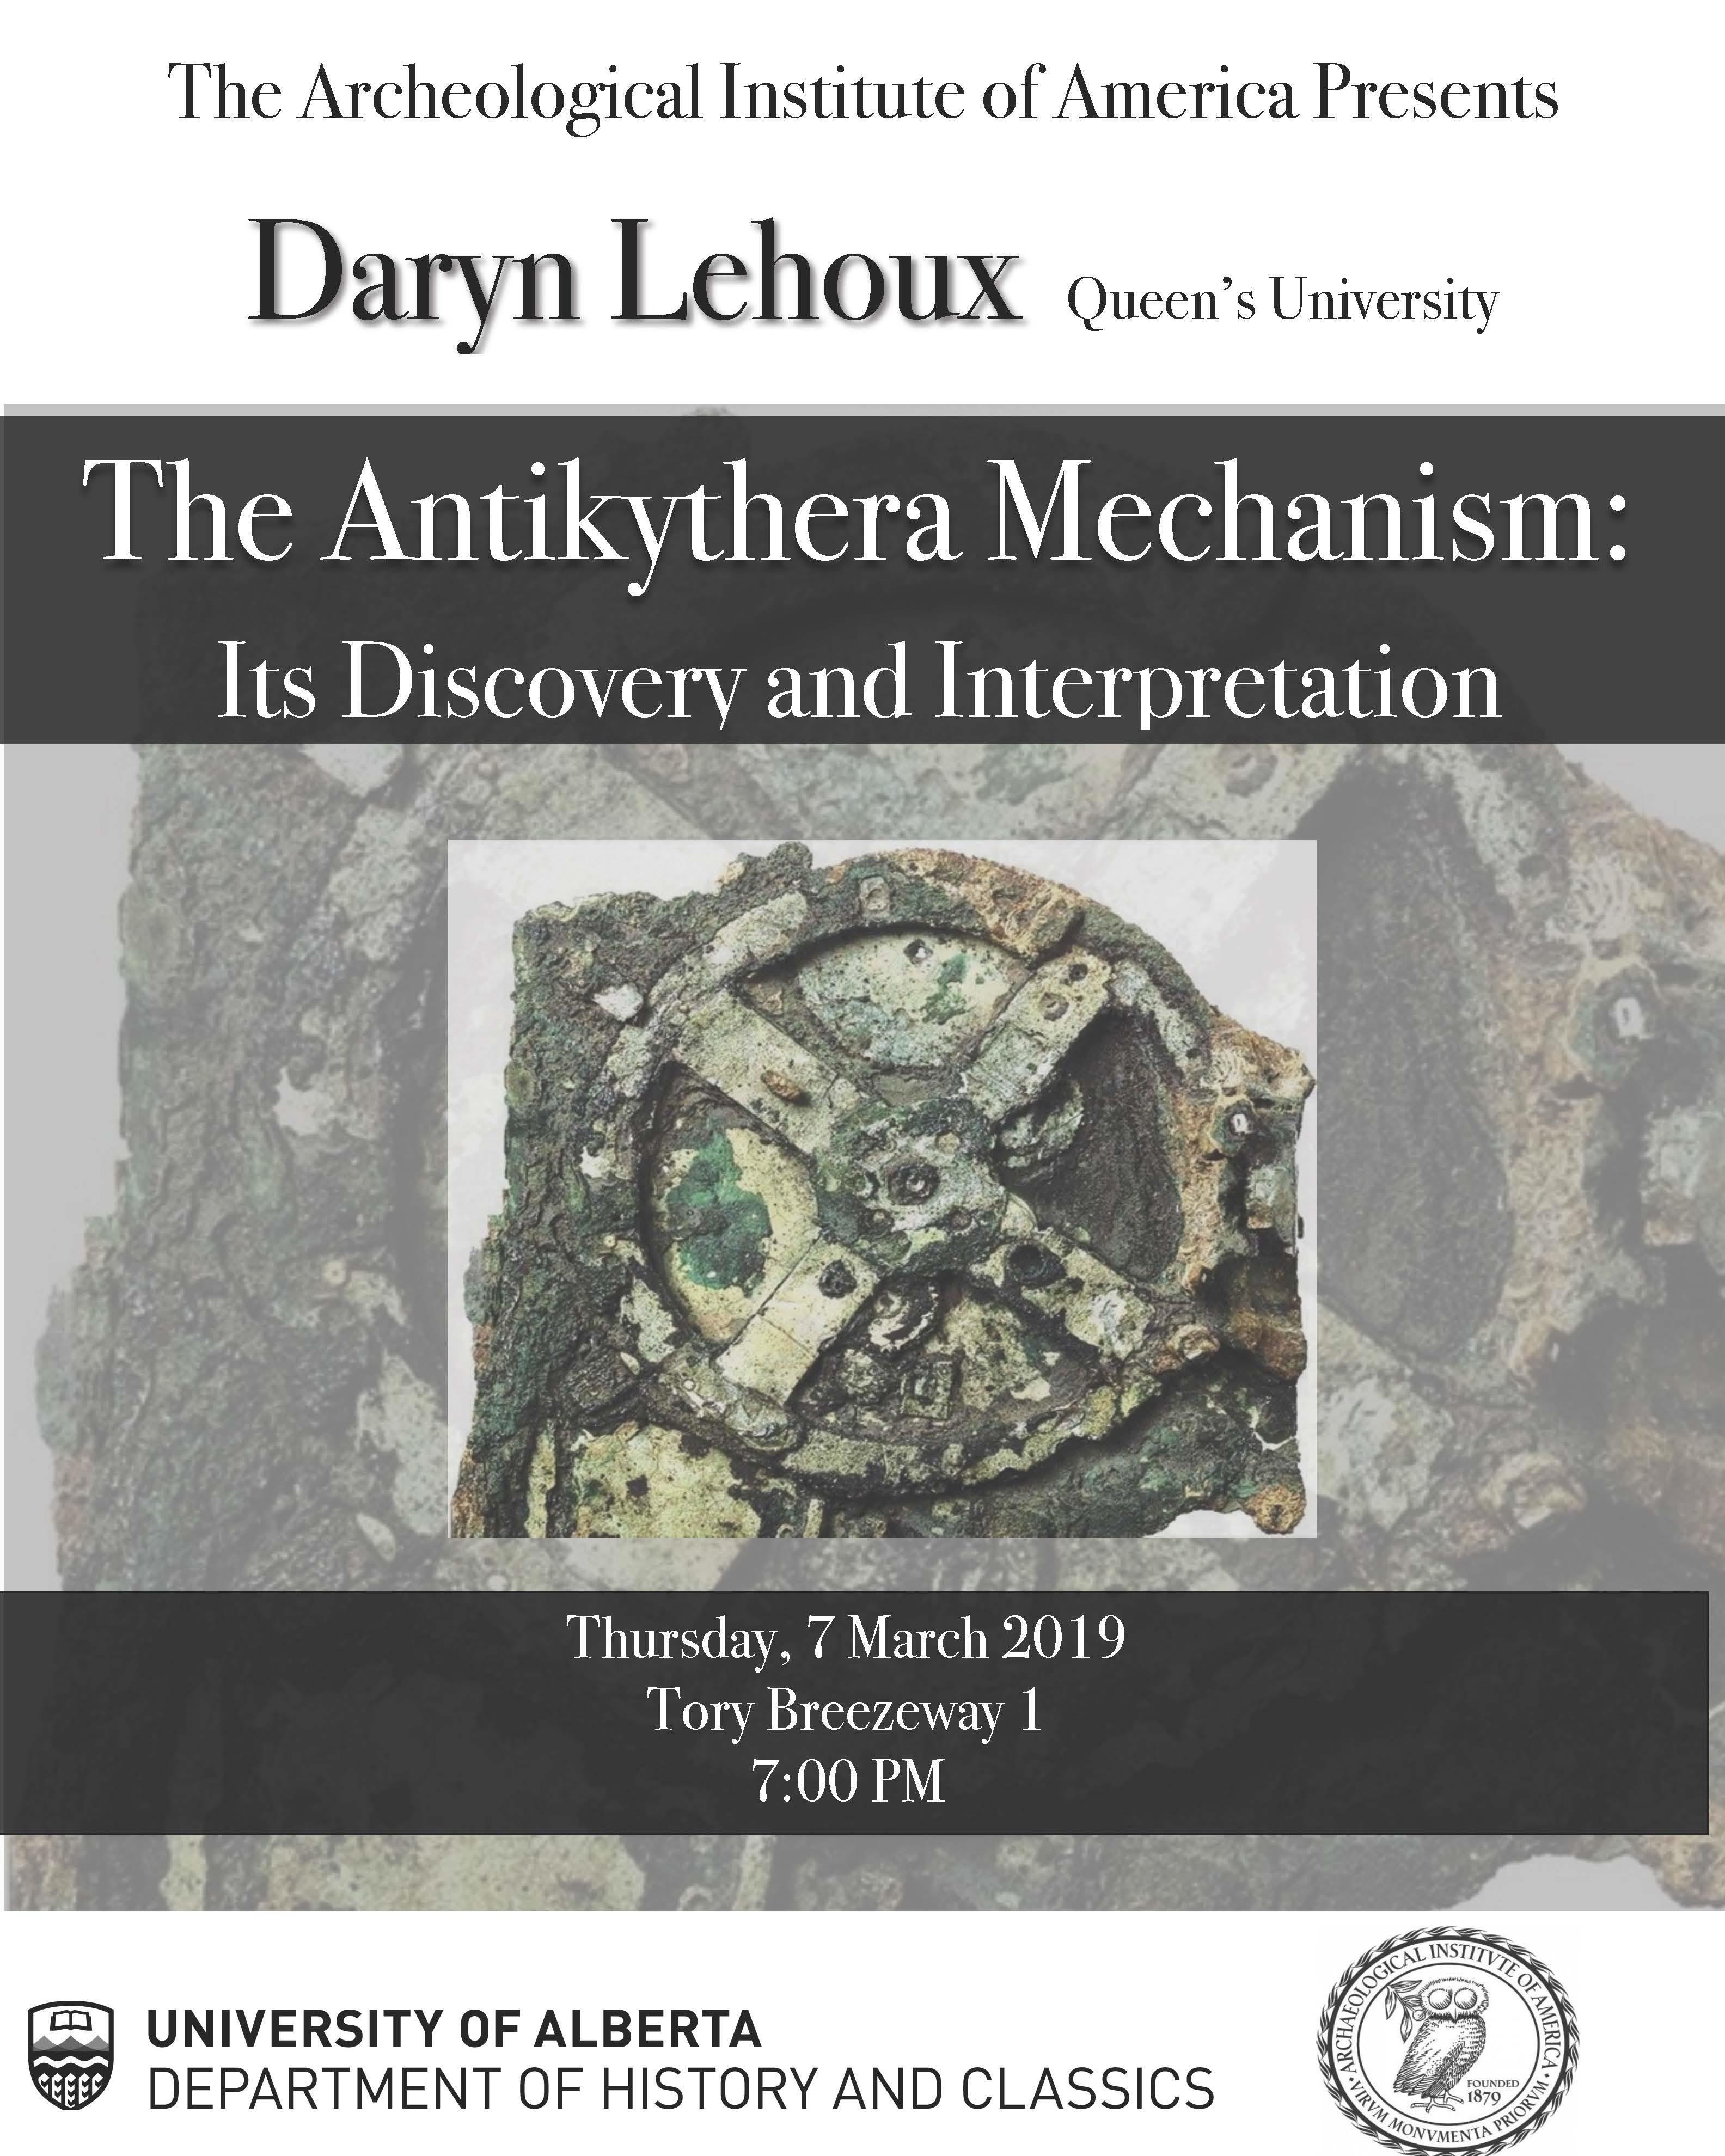 Antikythera Mechanism - Atlas Obscura